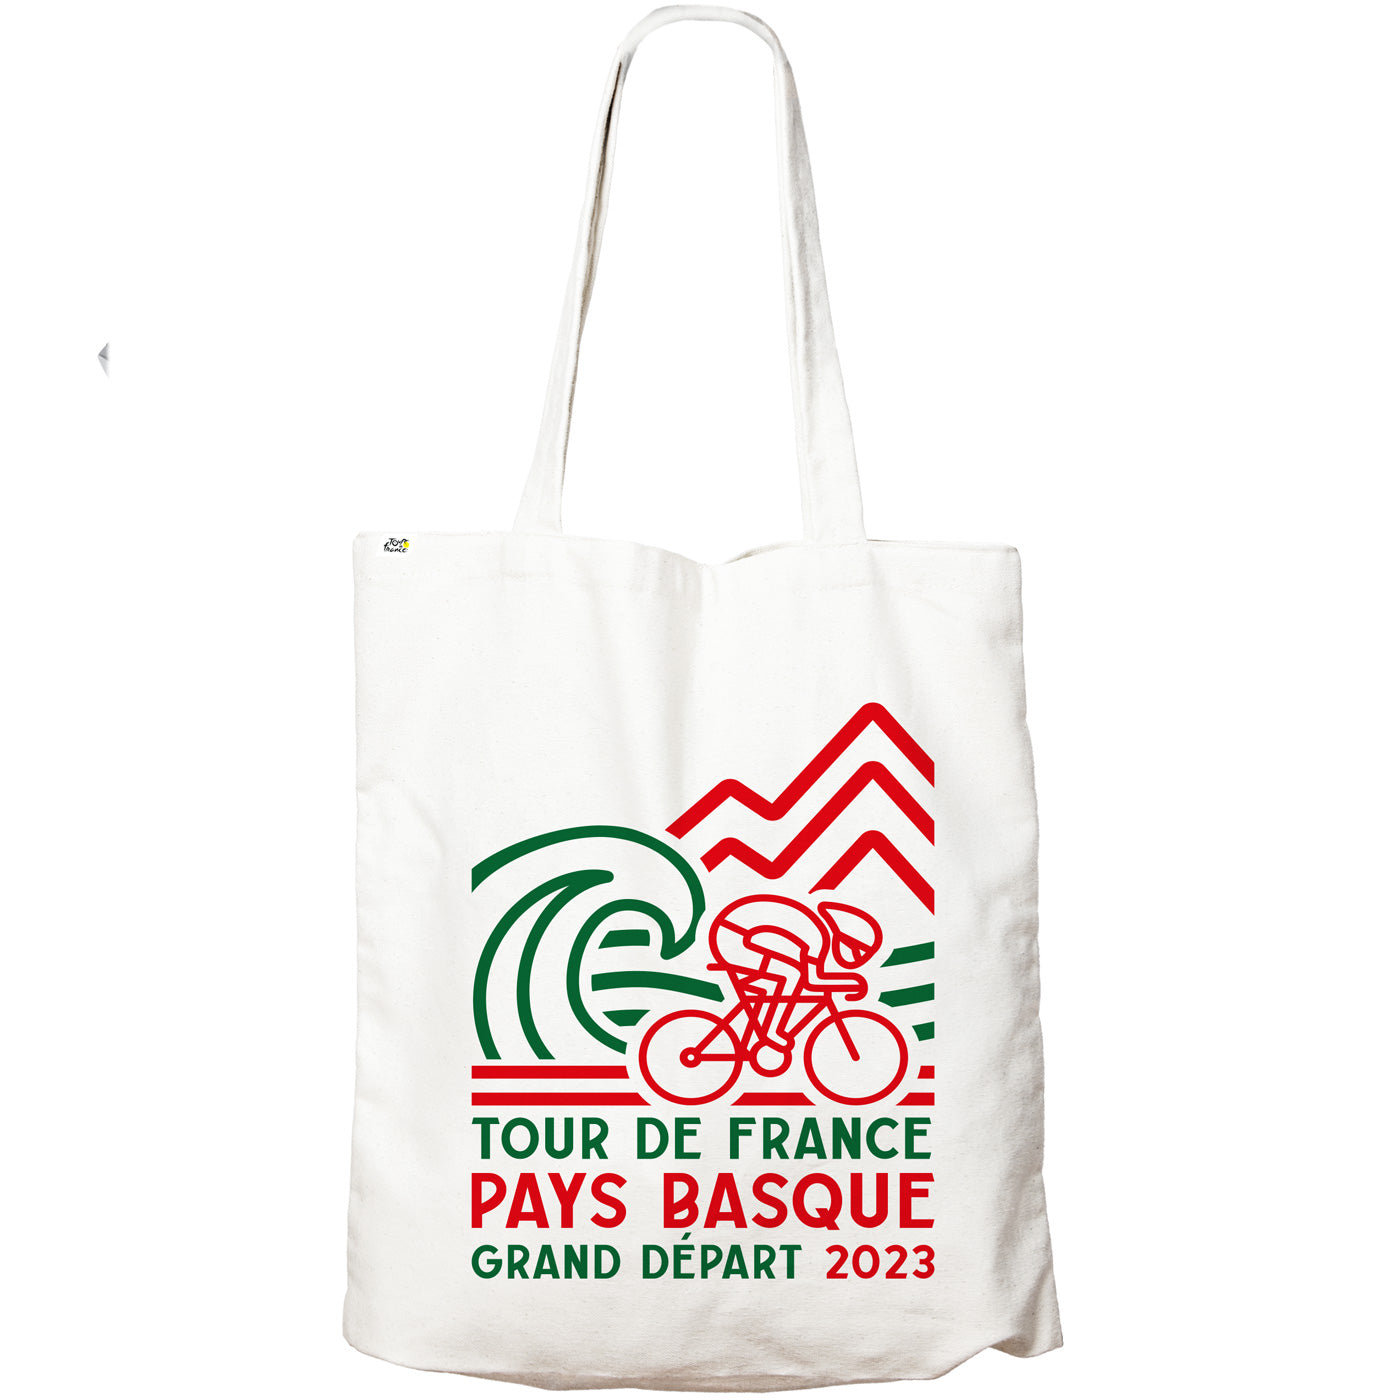 Tour de France 2023 cotton bag - Grand Depart Euskadi